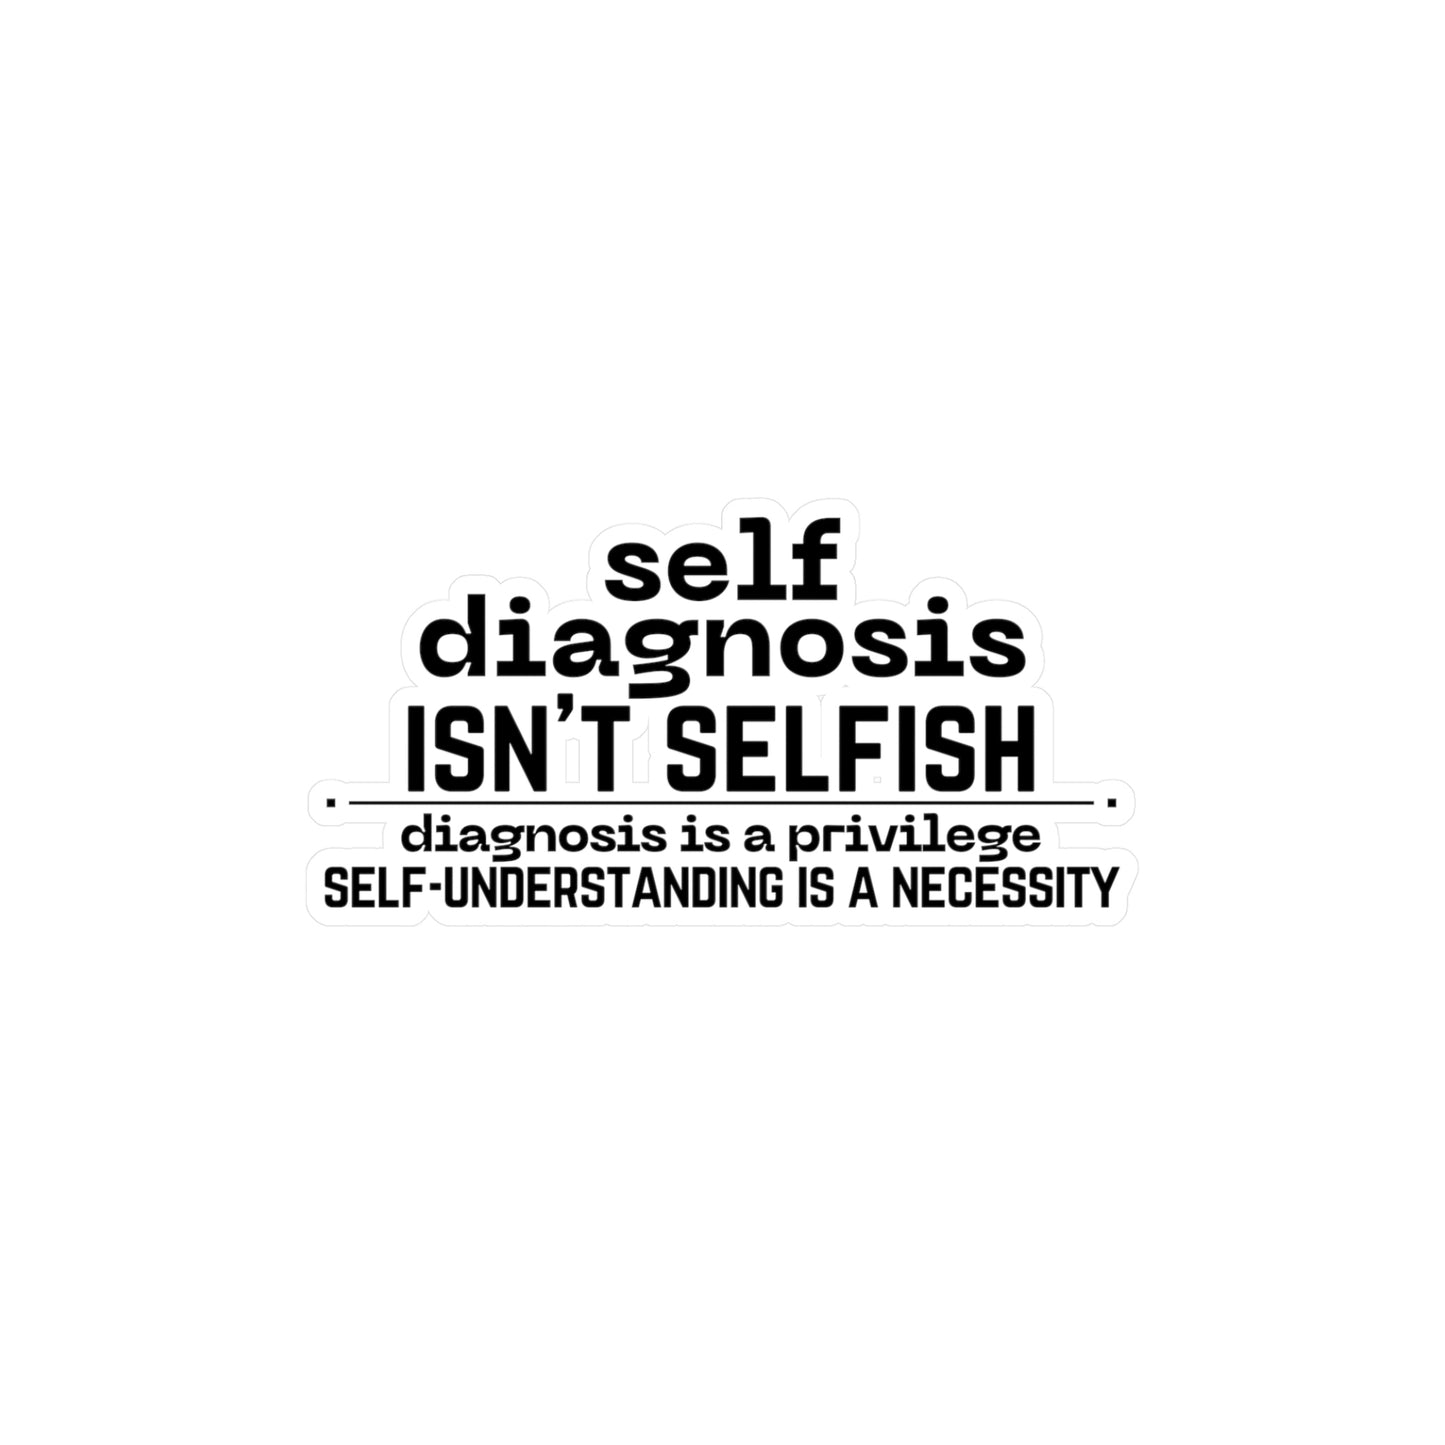 "Self Diagnosis Isn't Selfish" Kiss-Cut Vinyl Decals